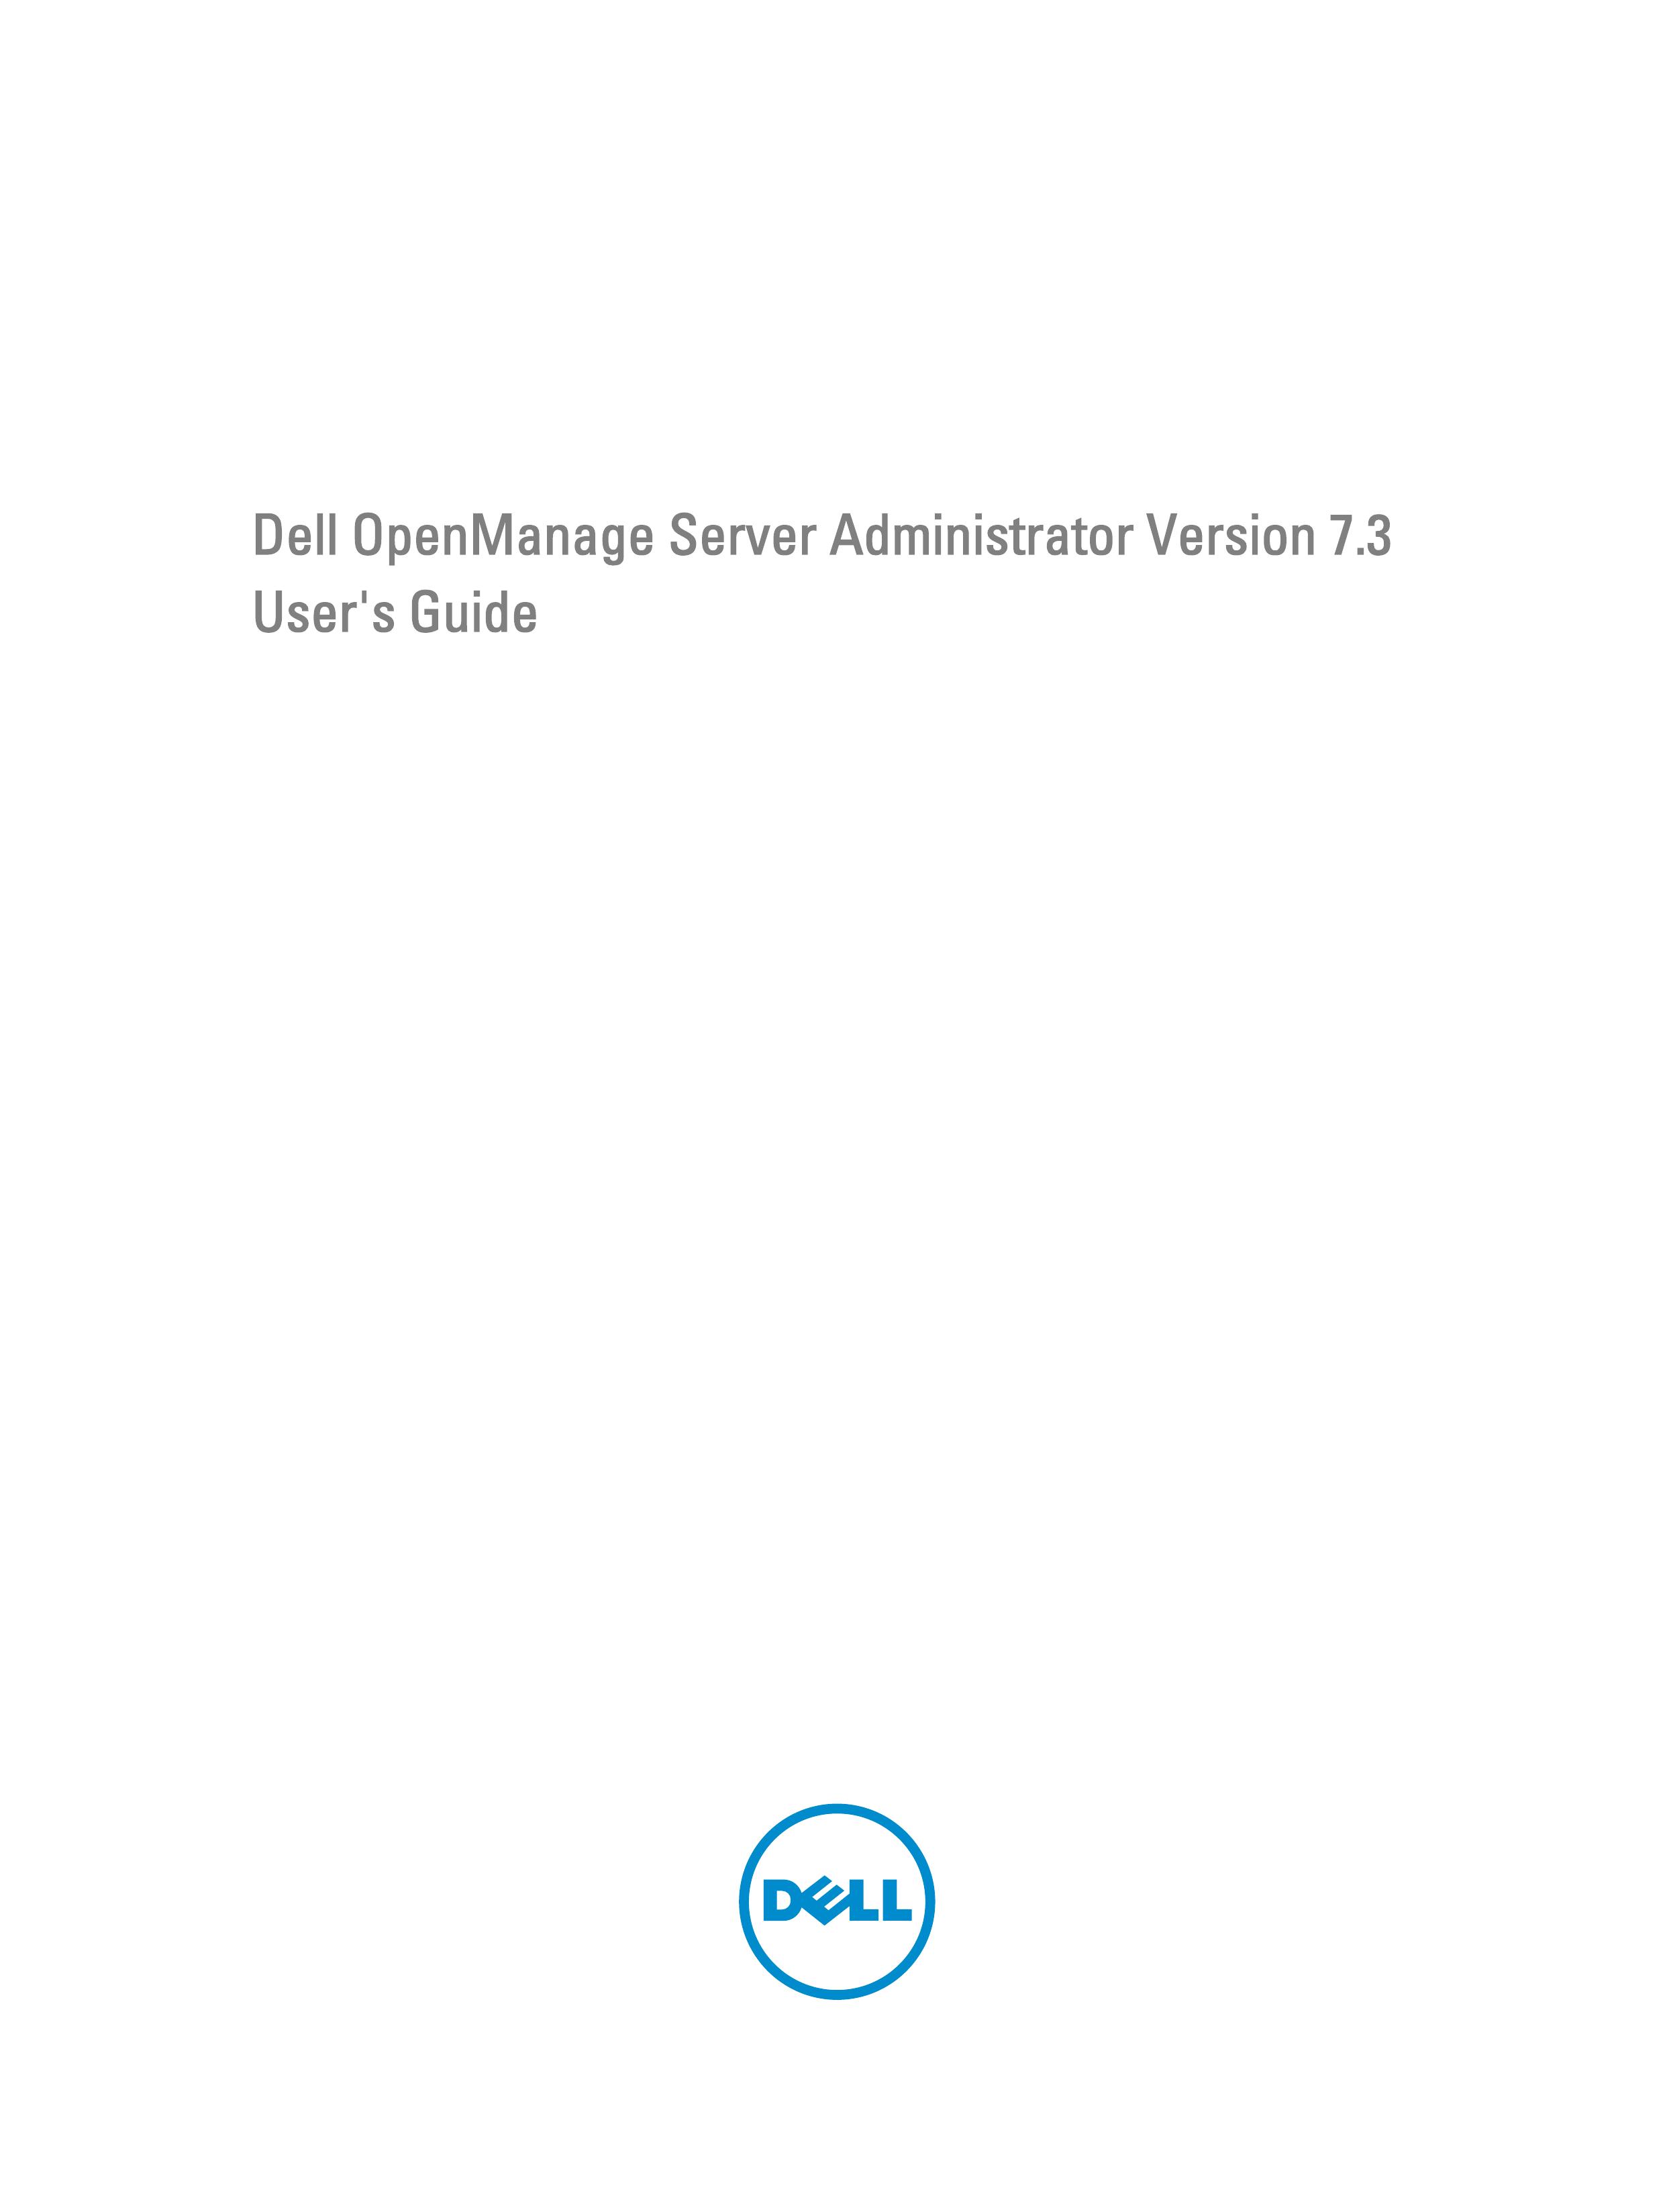 Dell Version 7.3 Life Jacket User Manual